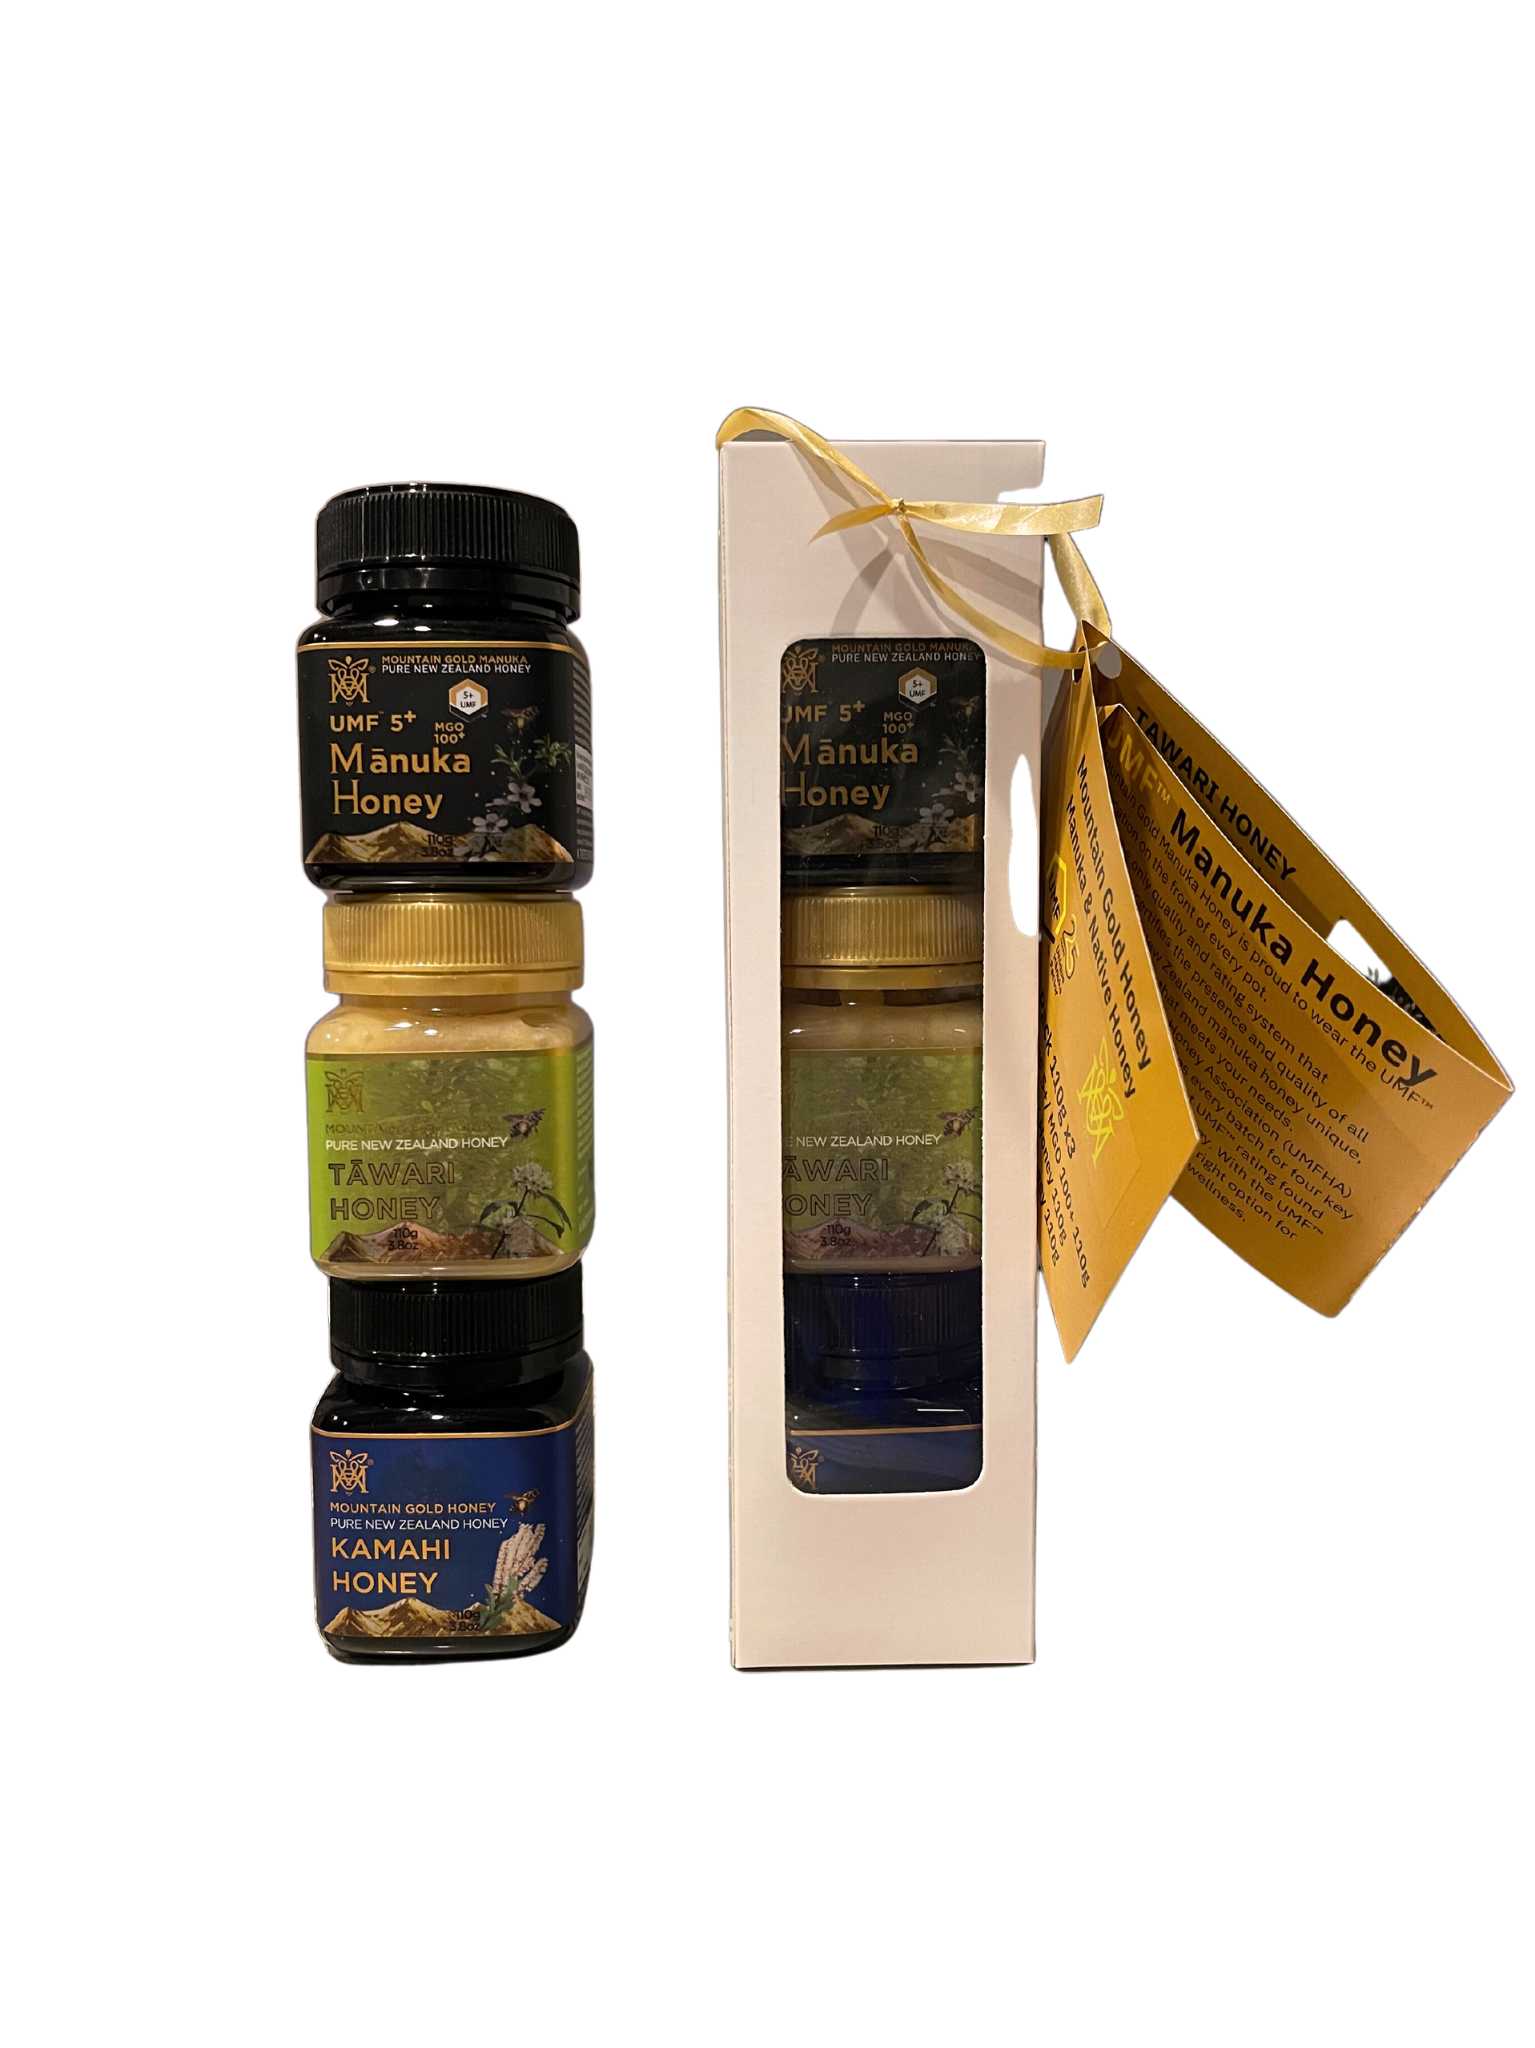 Mountain Gold UMF 5+ Manuka, Kamahi, and Tawari Honey Gift Pack